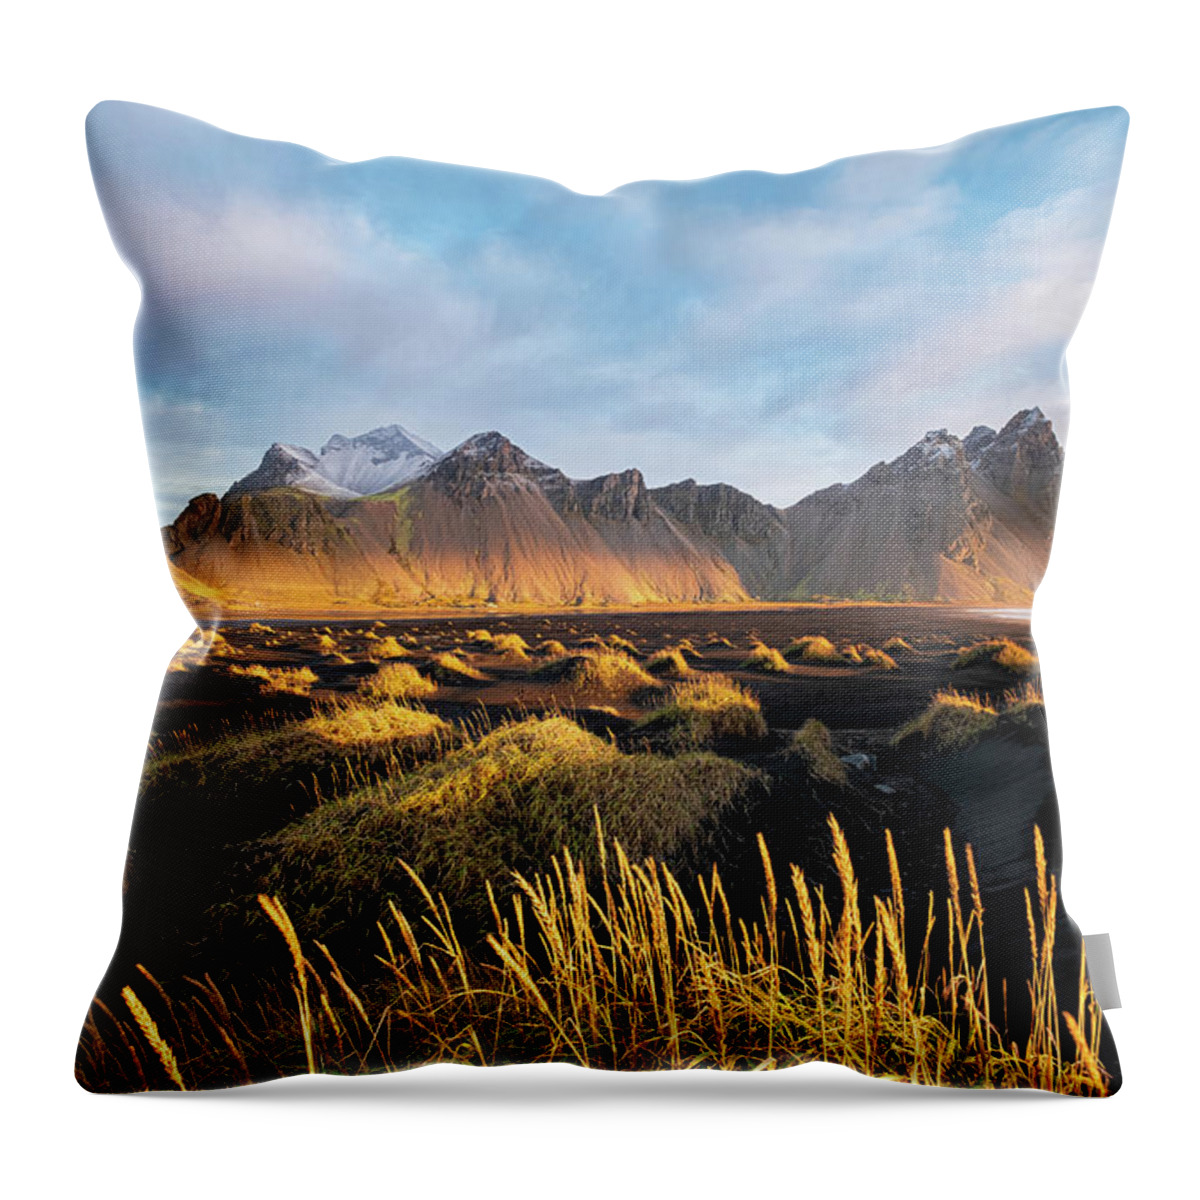 Vestrahorn Throw Pillow featuring the photograph Golden Sunrise at Vestrahorn by Alexios Ntounas